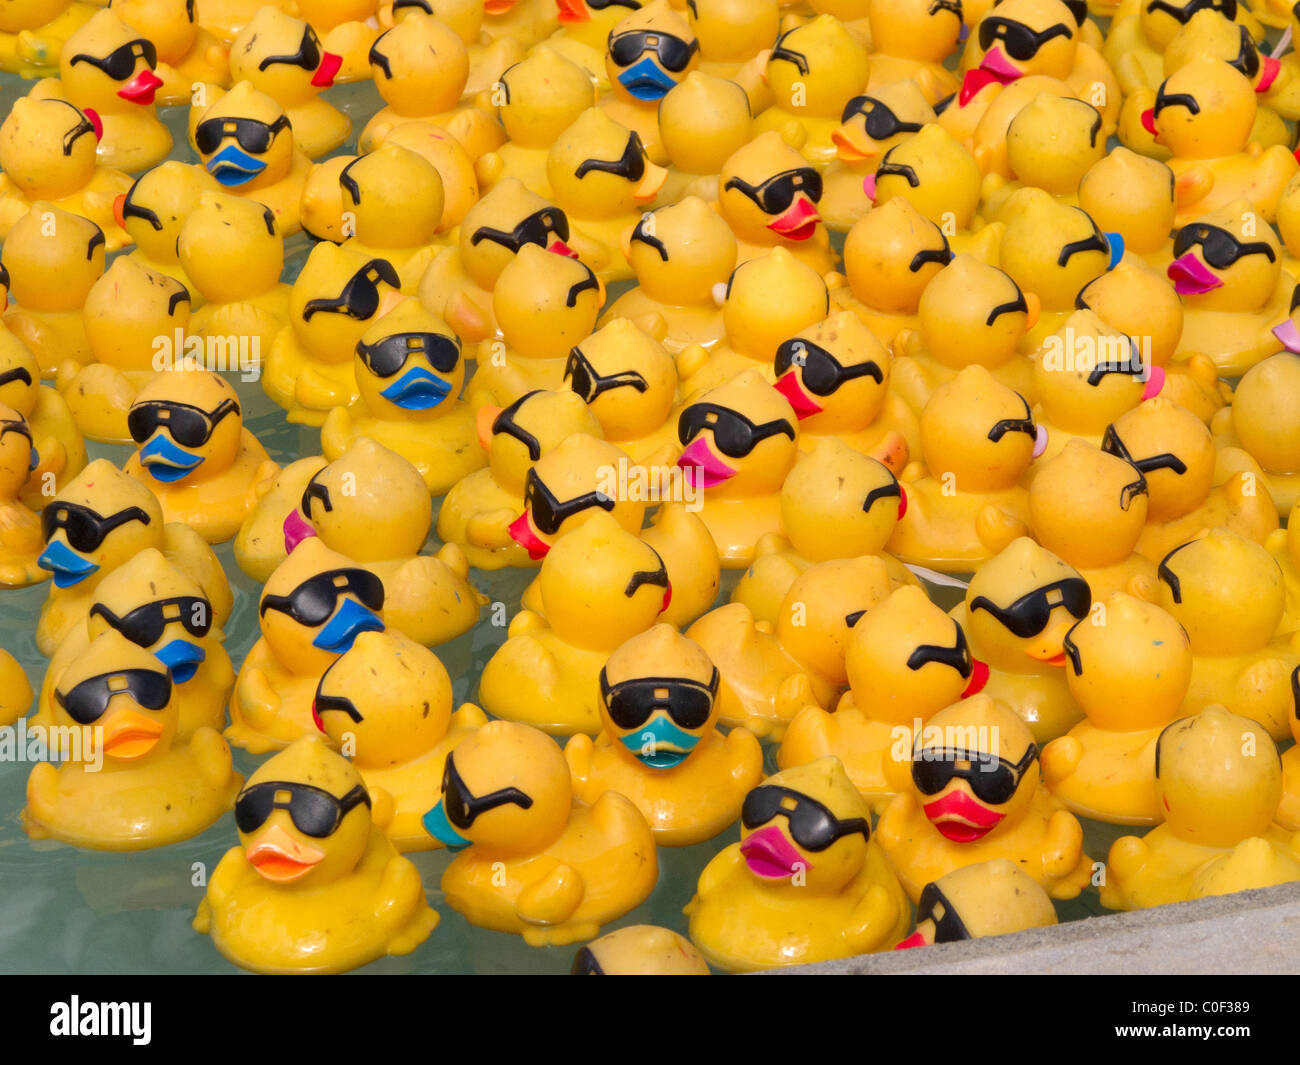 Rubber duckies. Stock Photo